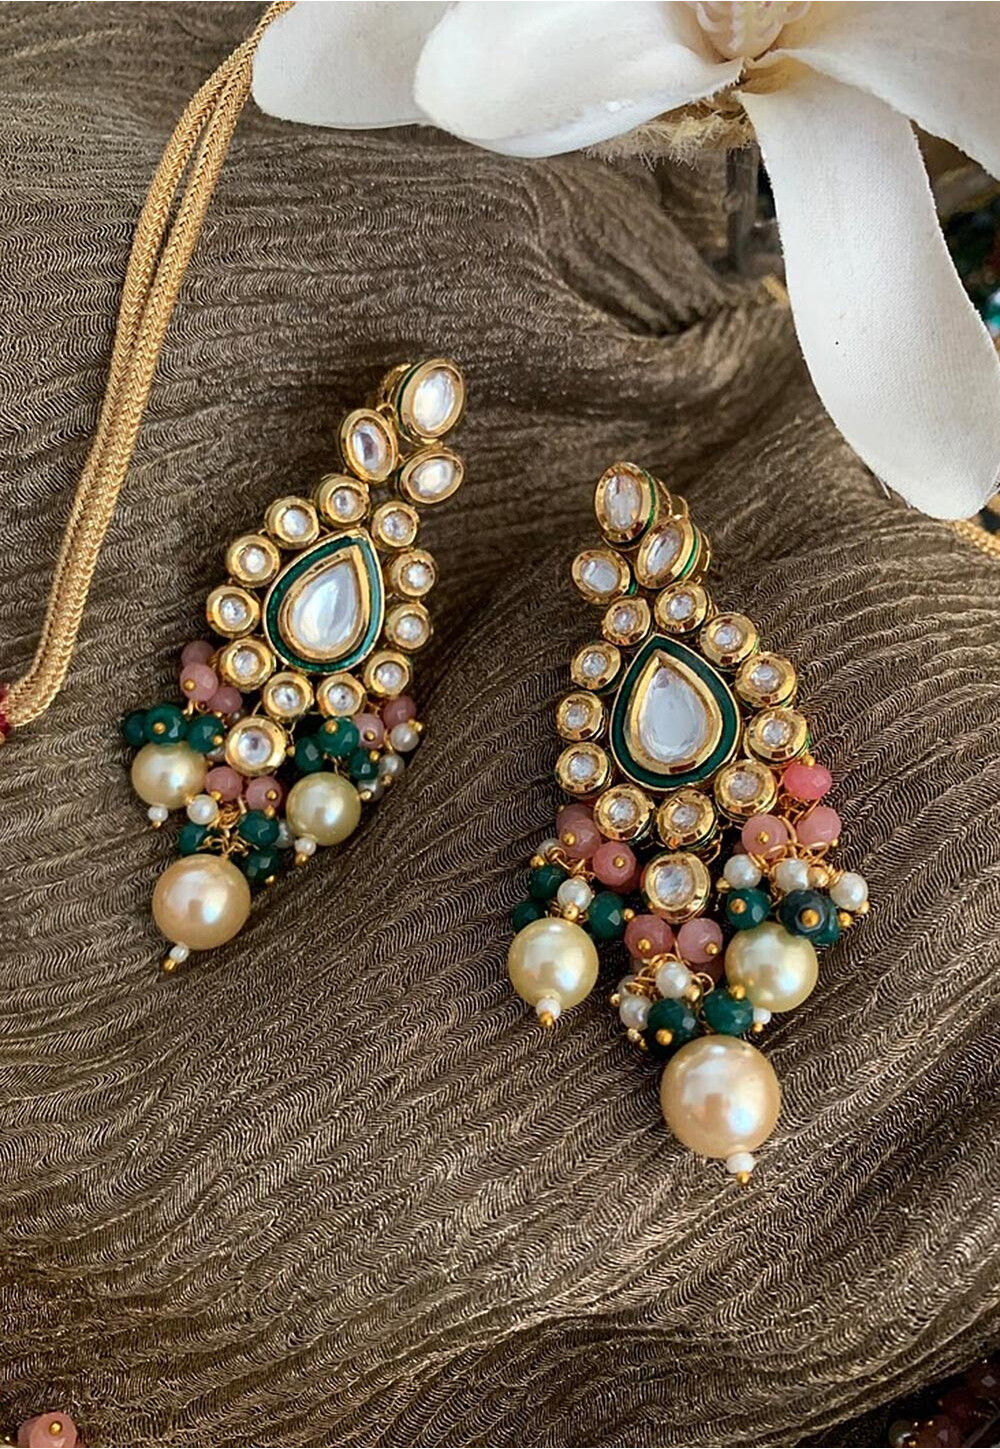 Jawaharat Beautiful Necklace with Beautiful Earrings Kundan Jewellery Set A  | eBay